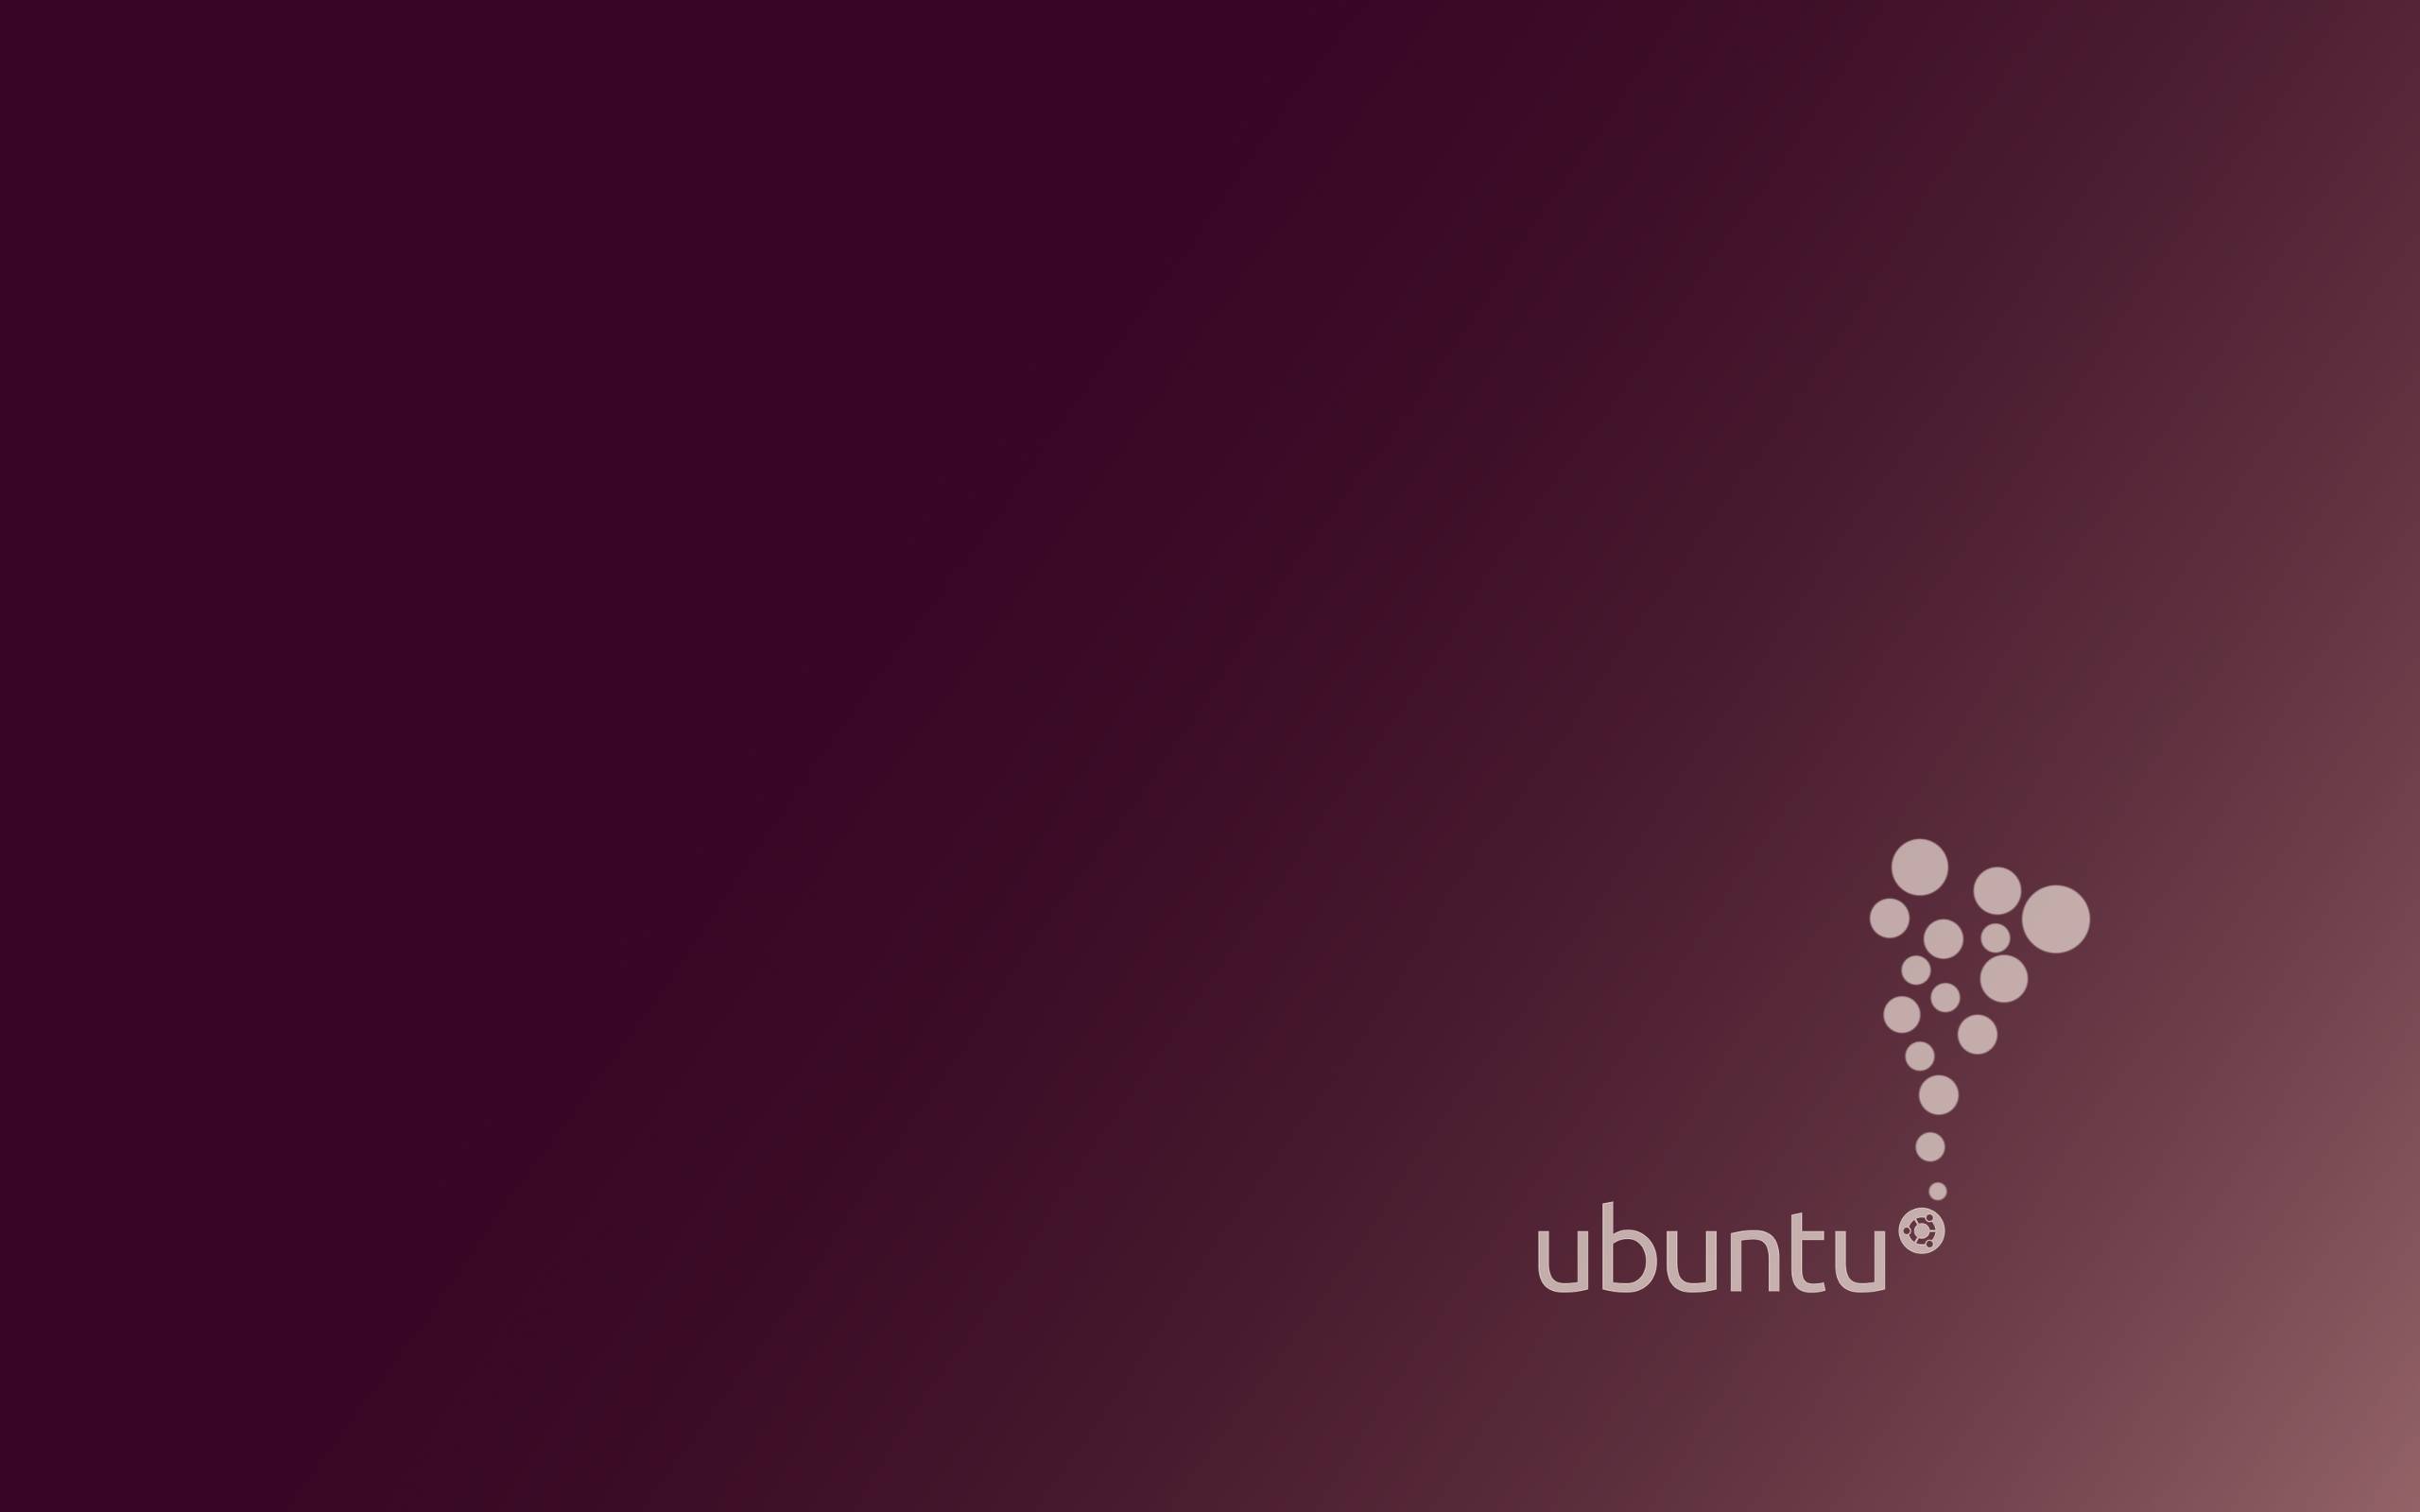 The Bubbly Ubuntu Wallpaper iPhone